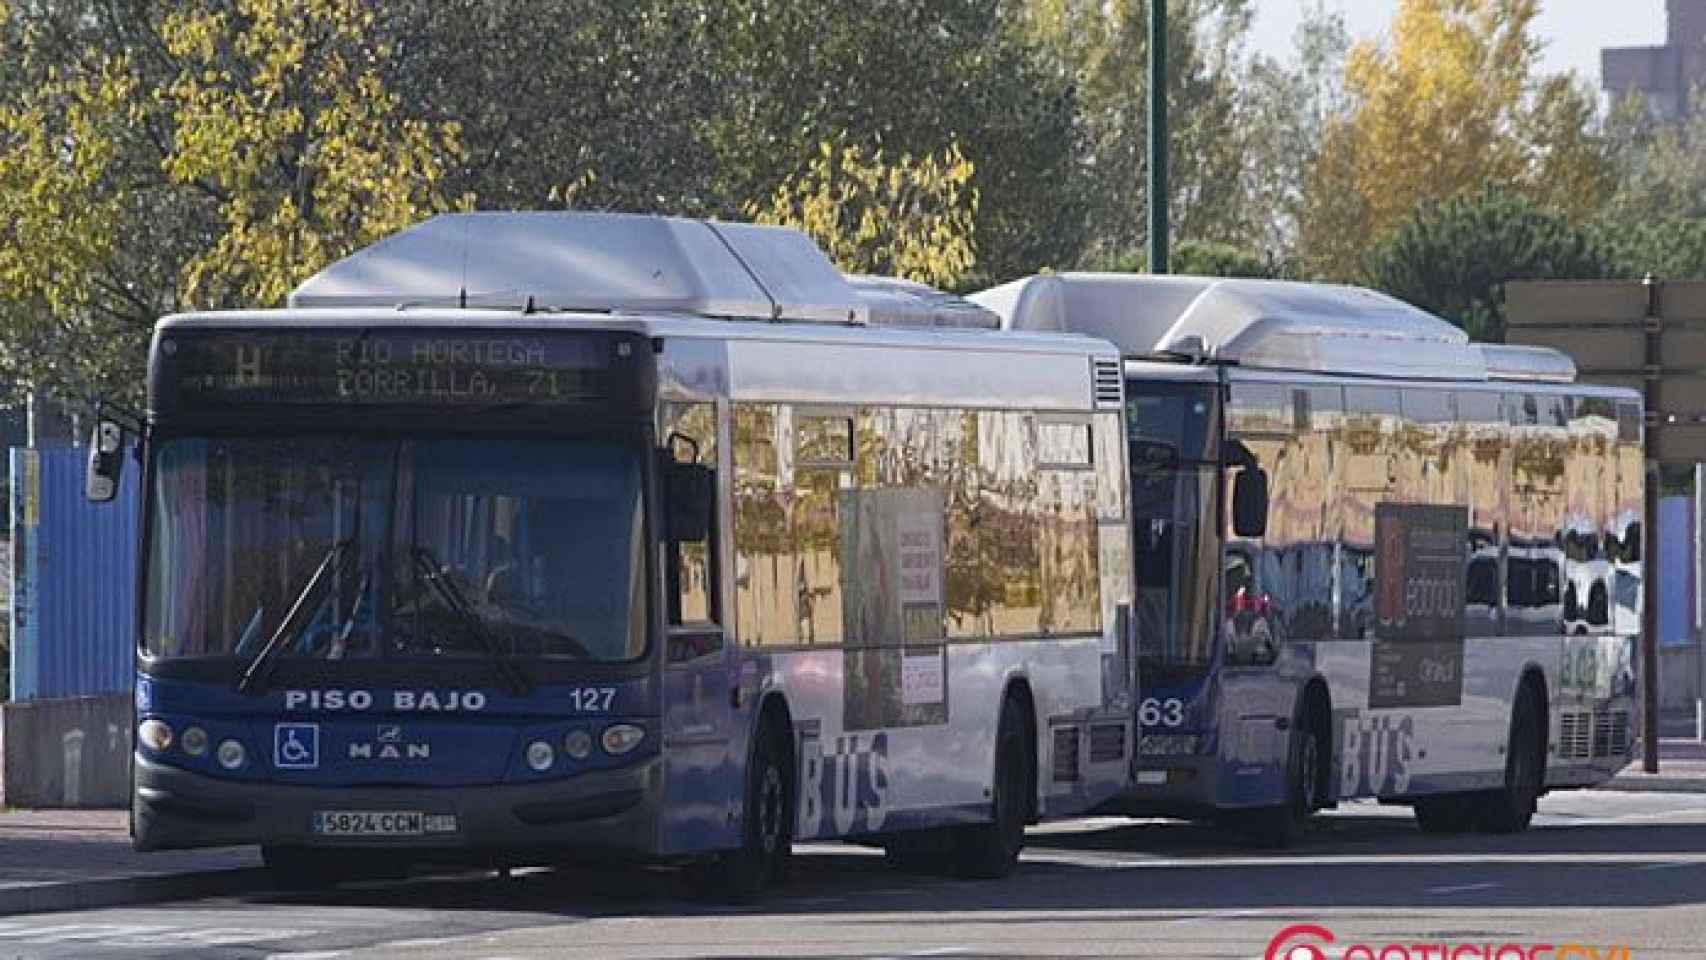 valladolid-auvasa-autobus-pasajeros-transporte-3